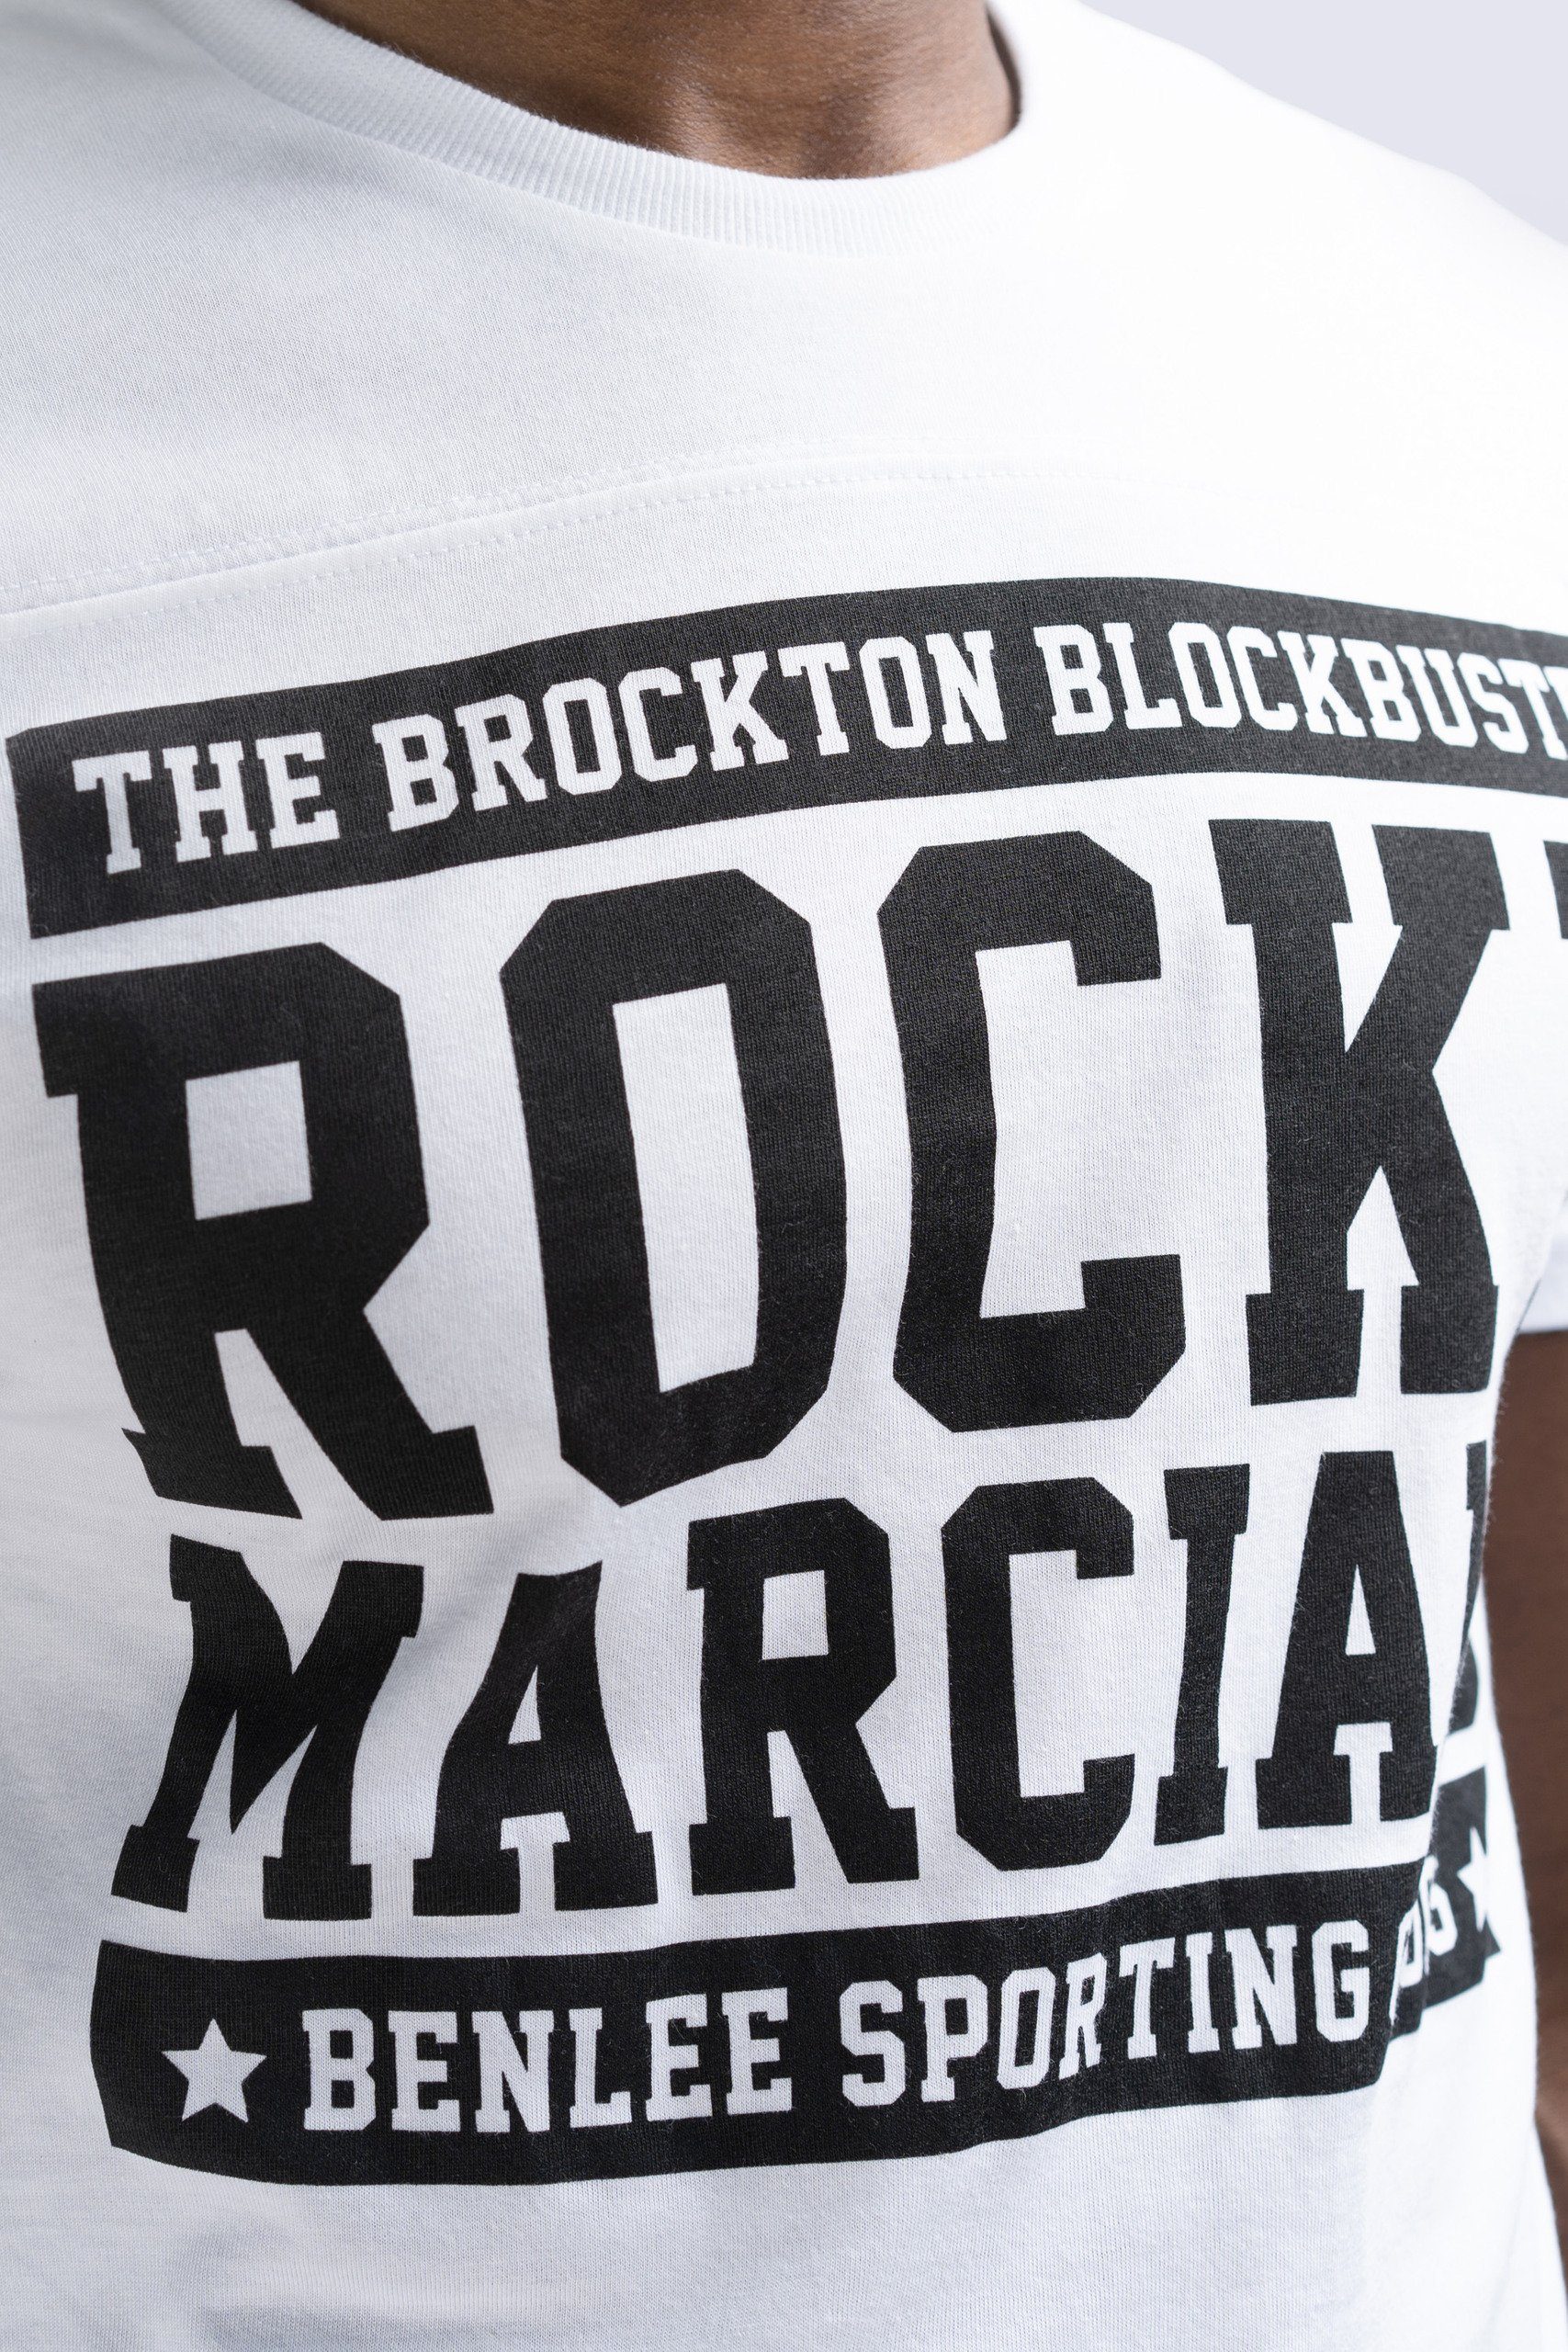 Rocky T-Shirt Marciano ALLENTON Benlee